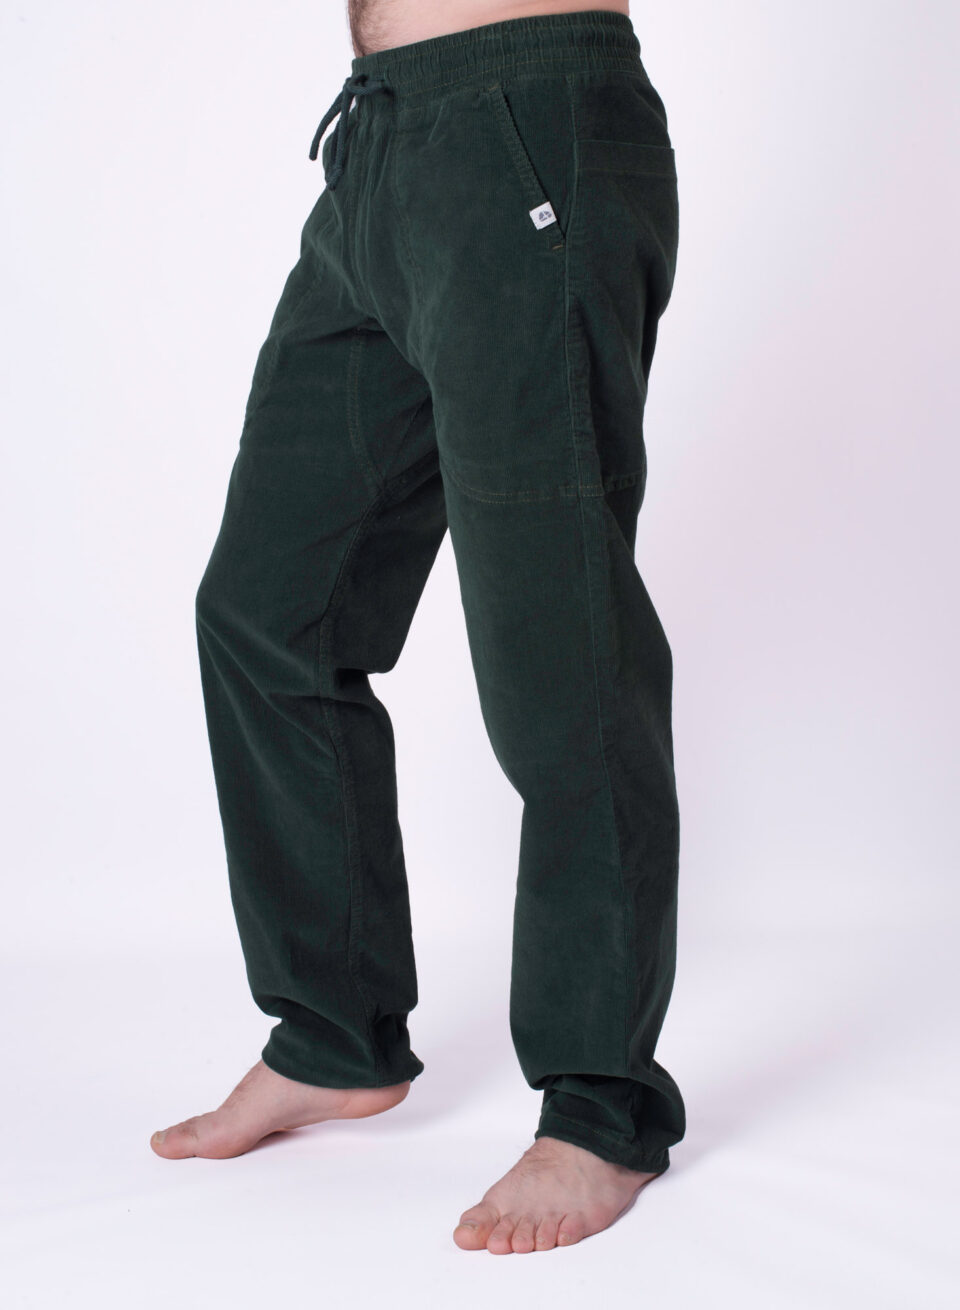 Rocket Pocket corduroy man pants- bottle green